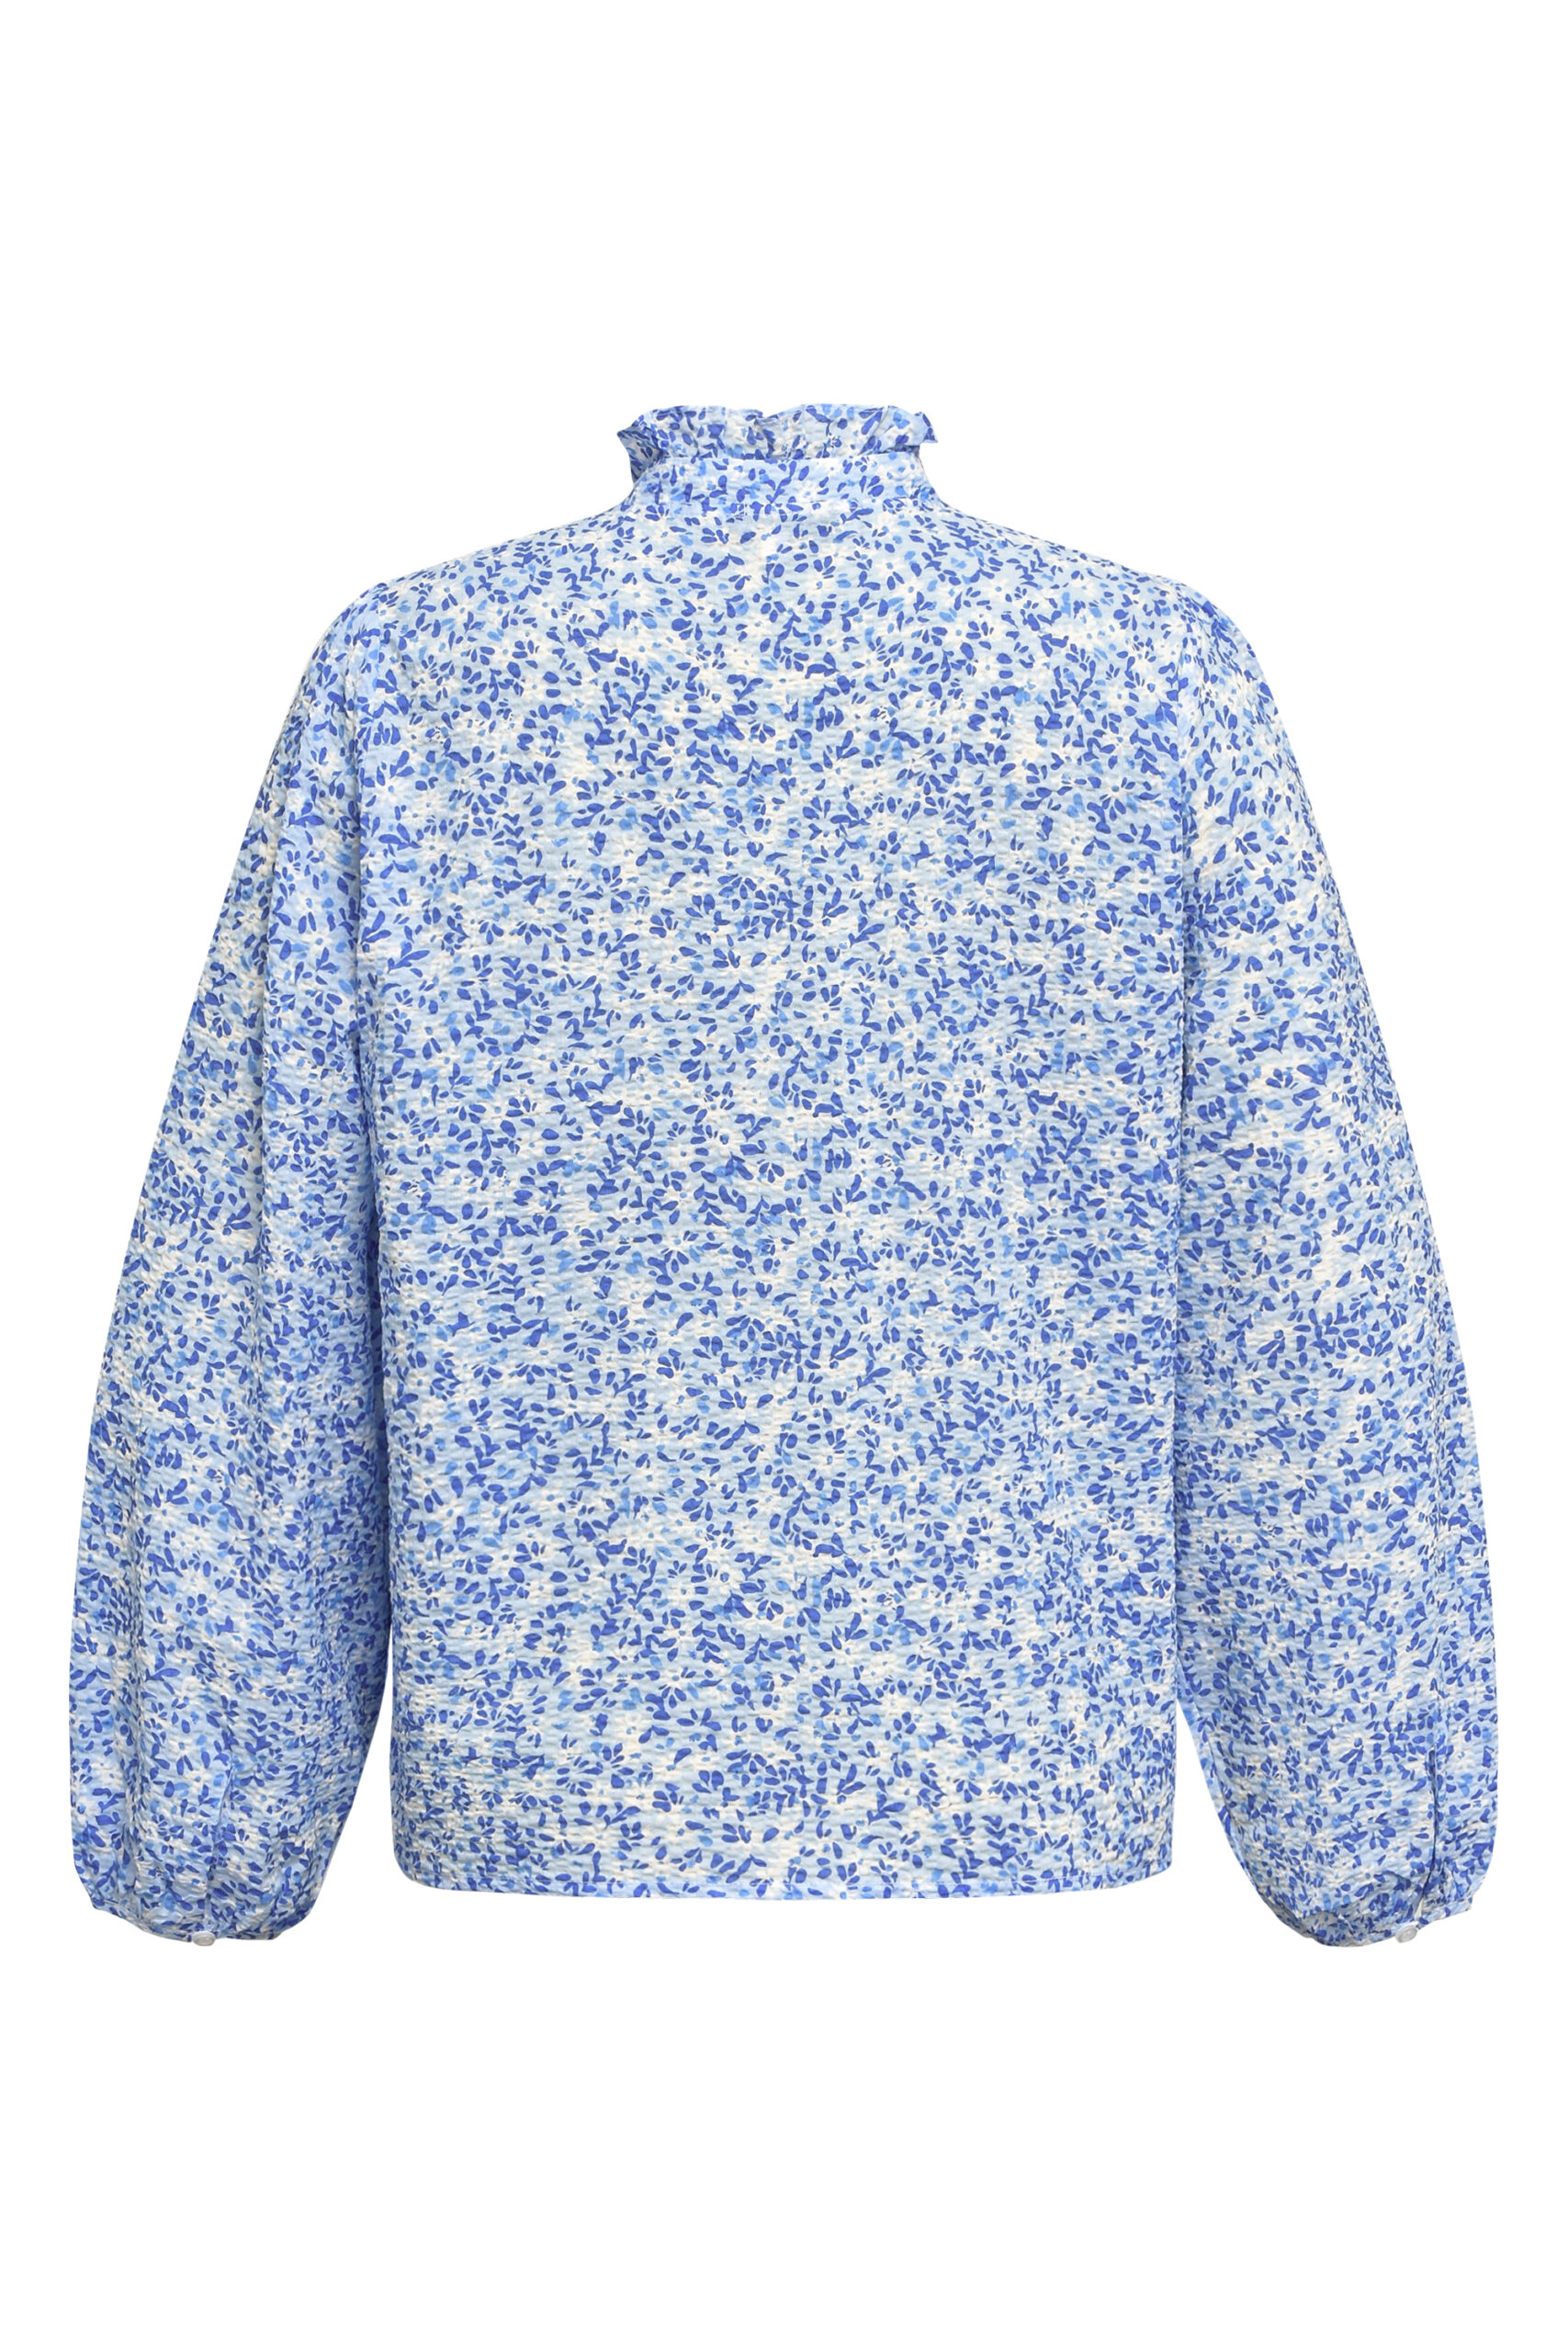 Tiffany Blue Print Shirt item back